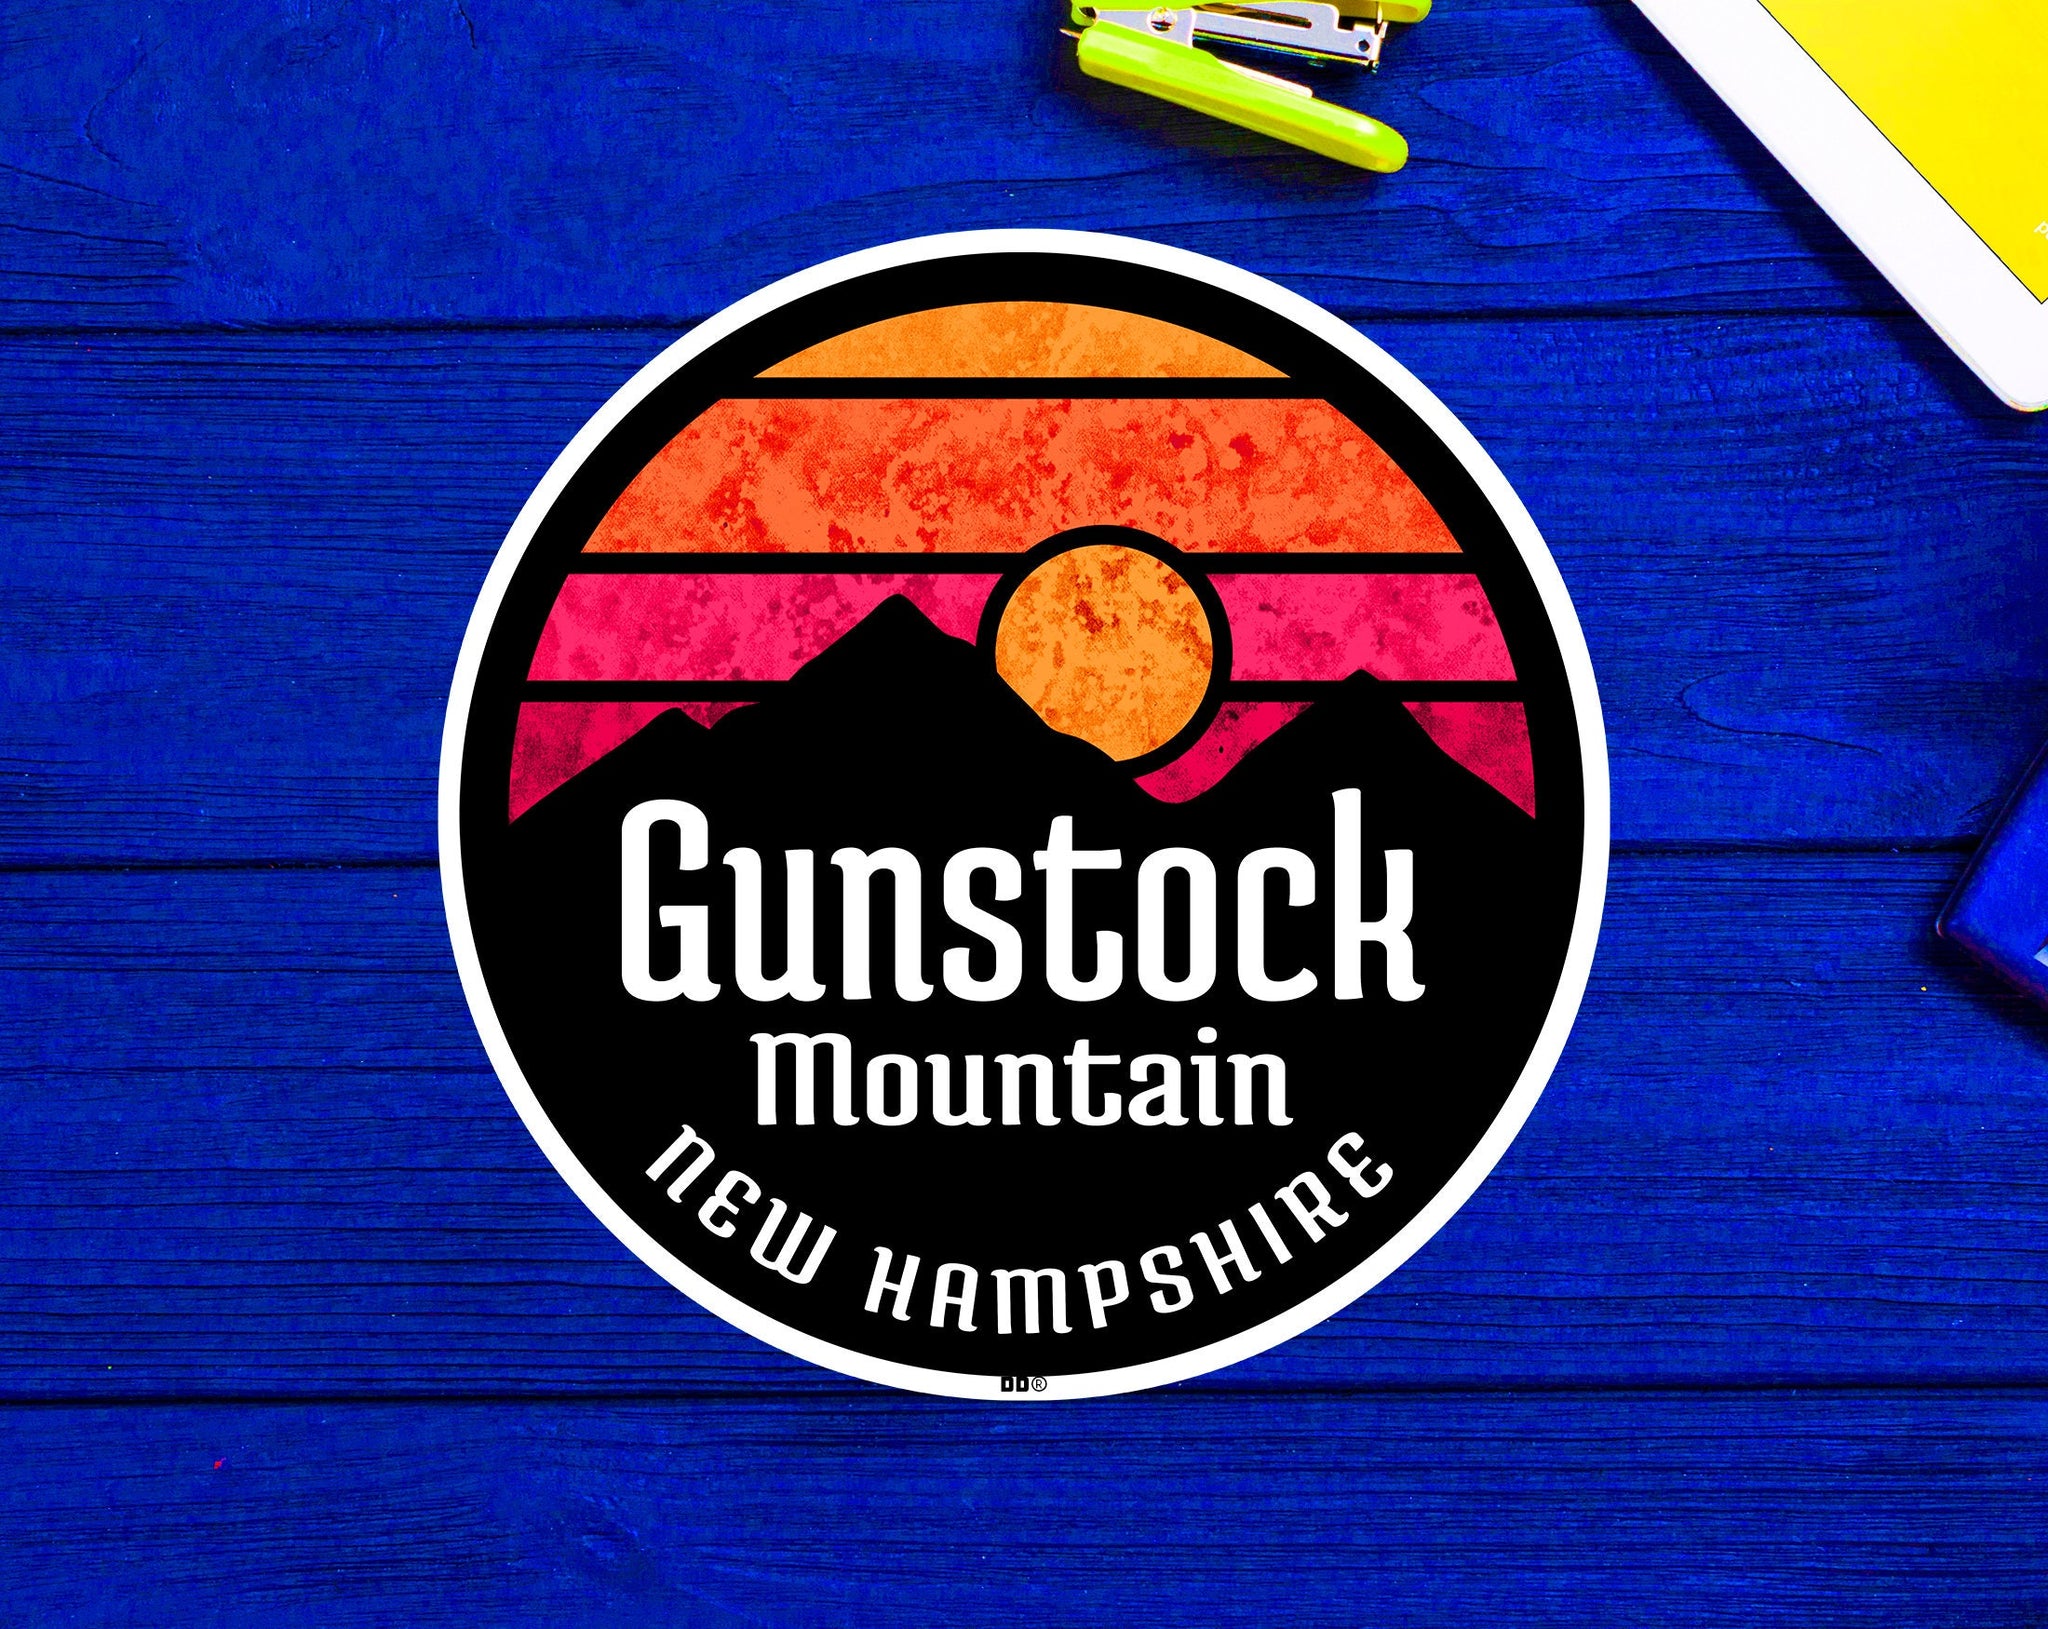 Gunstock Mountain New Hampshire Sticker Decal 3"